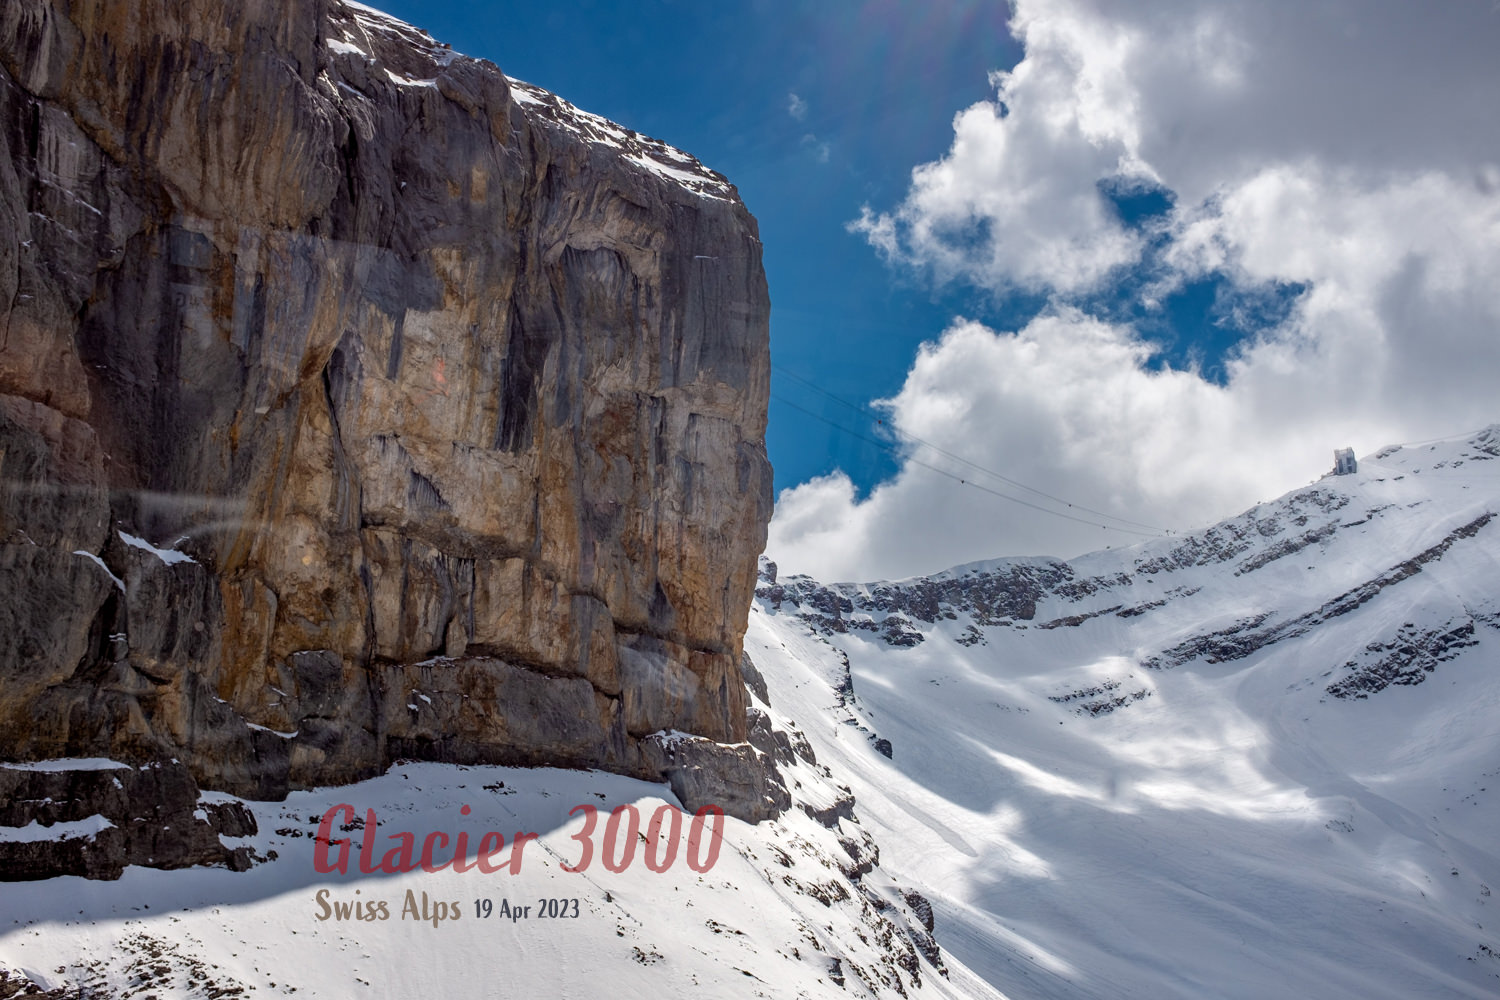 Glacier3000 Swiss Alps panoramic view